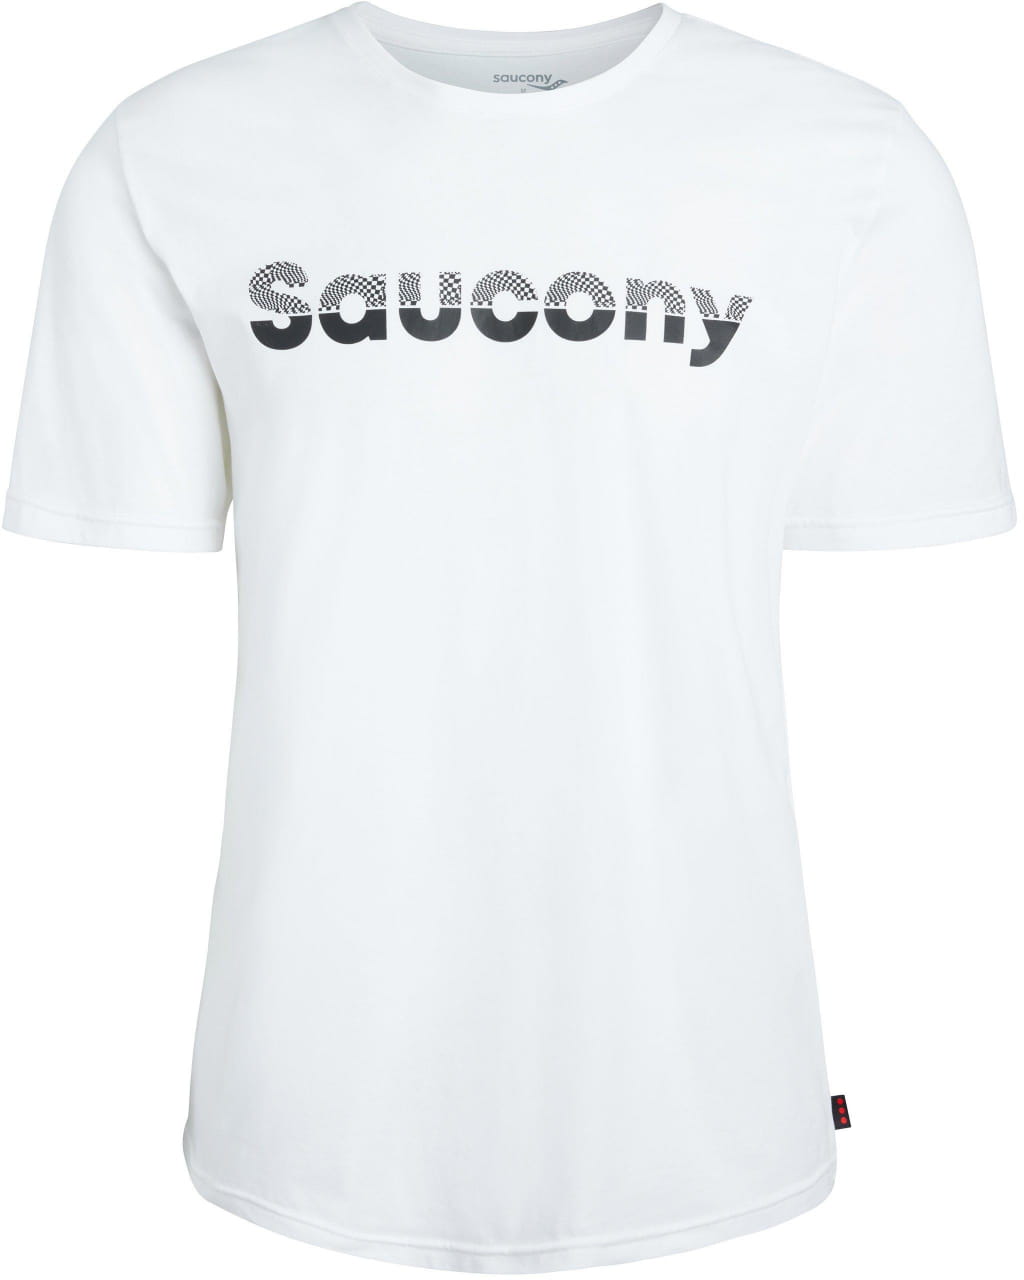 Sporthemd für Männer Saucony Rested Short Sleeve